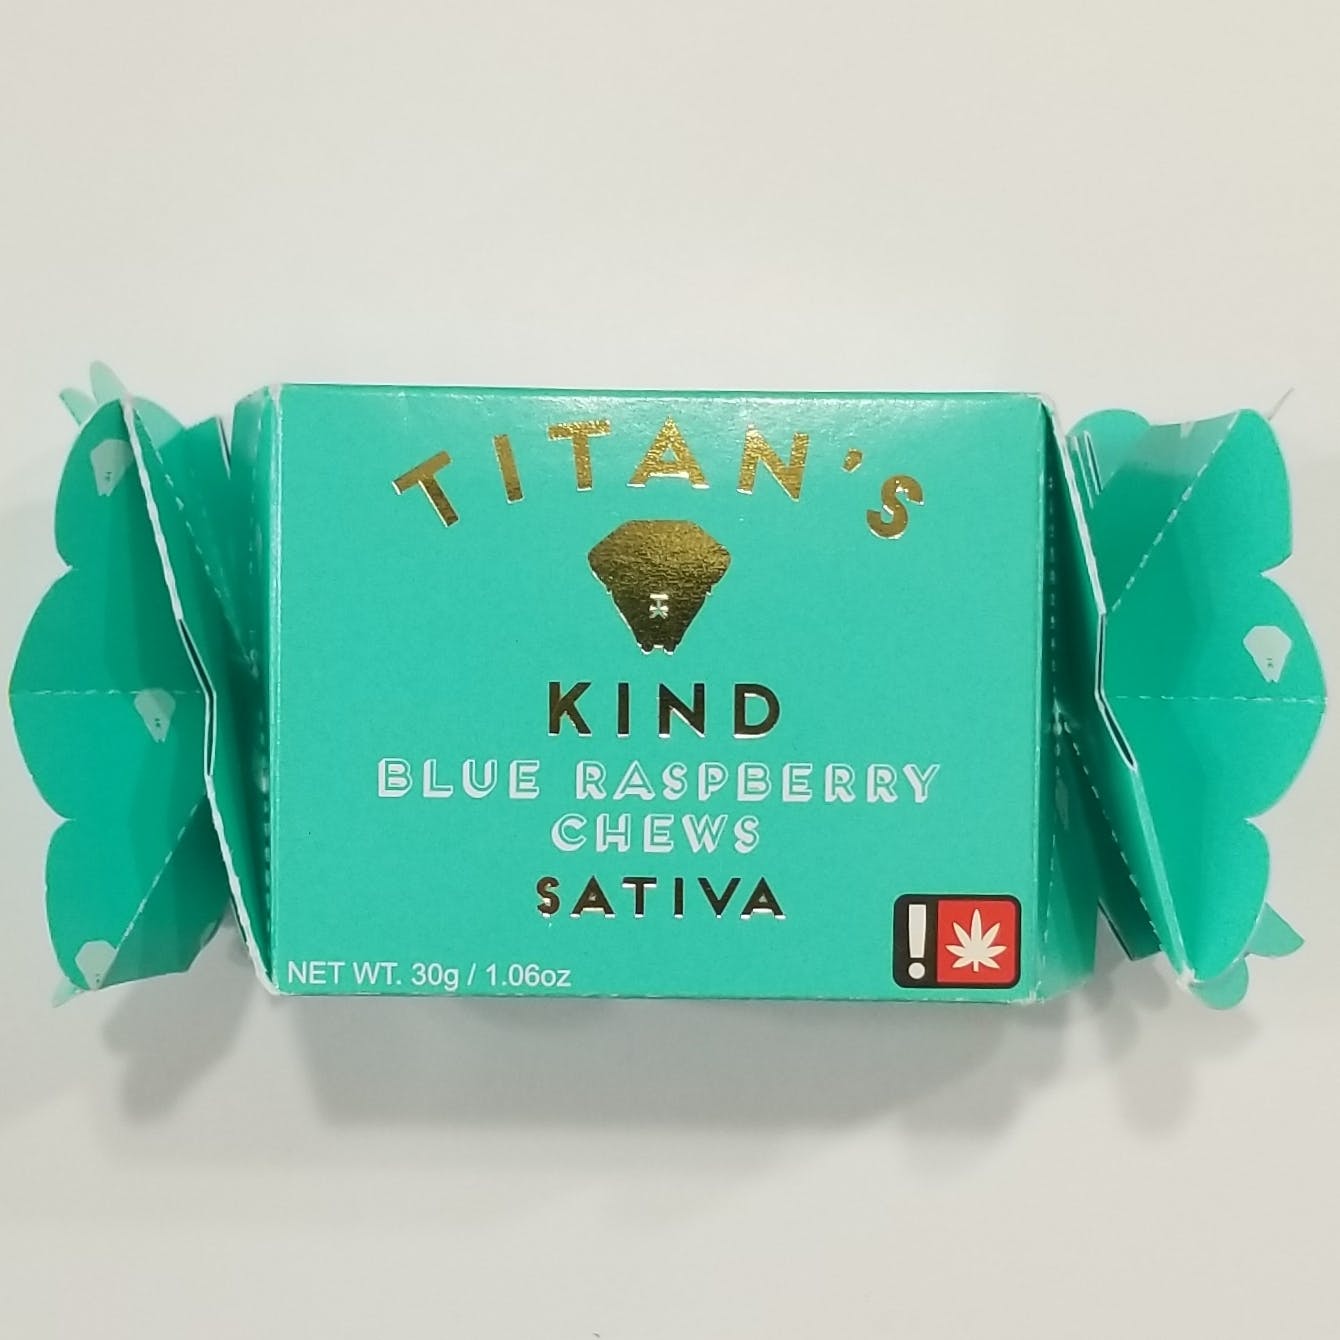 Blue Raspberry Chews- Titan's Kind